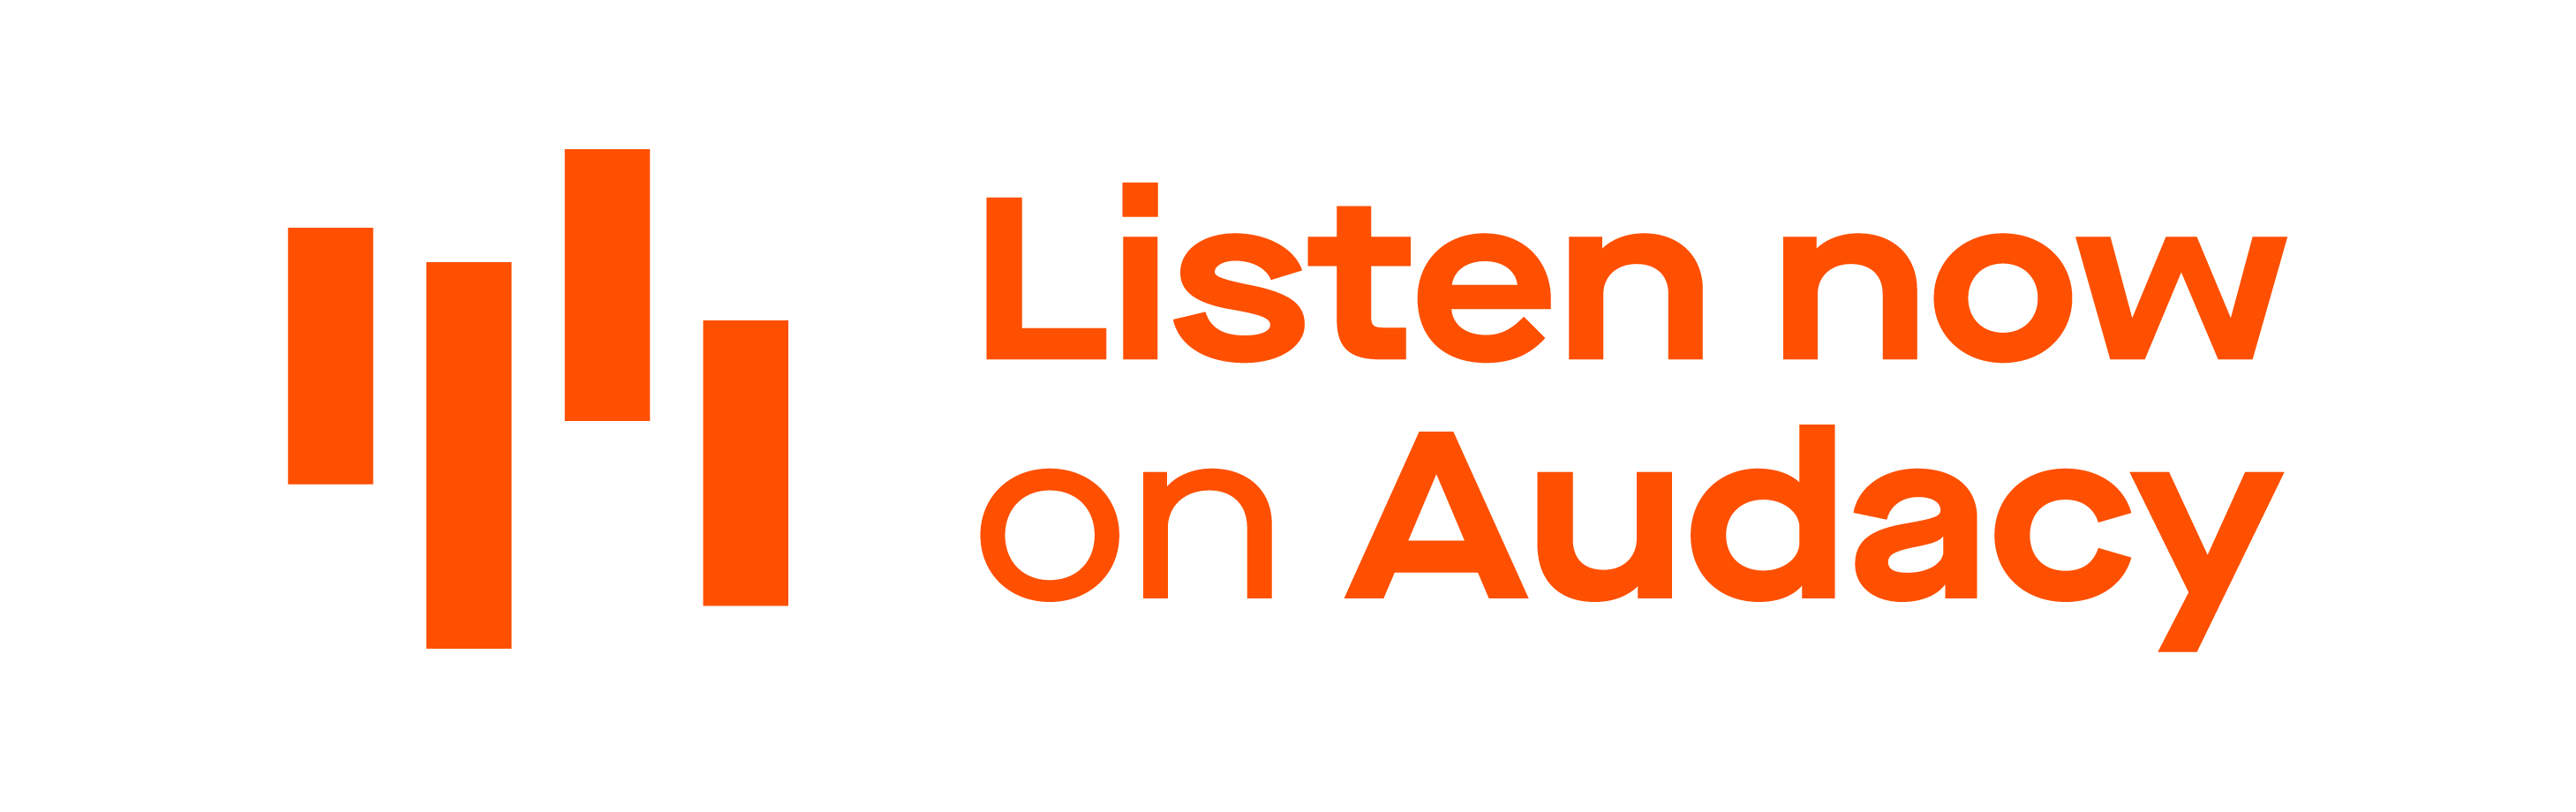 AUD_Listen_text_orange.png